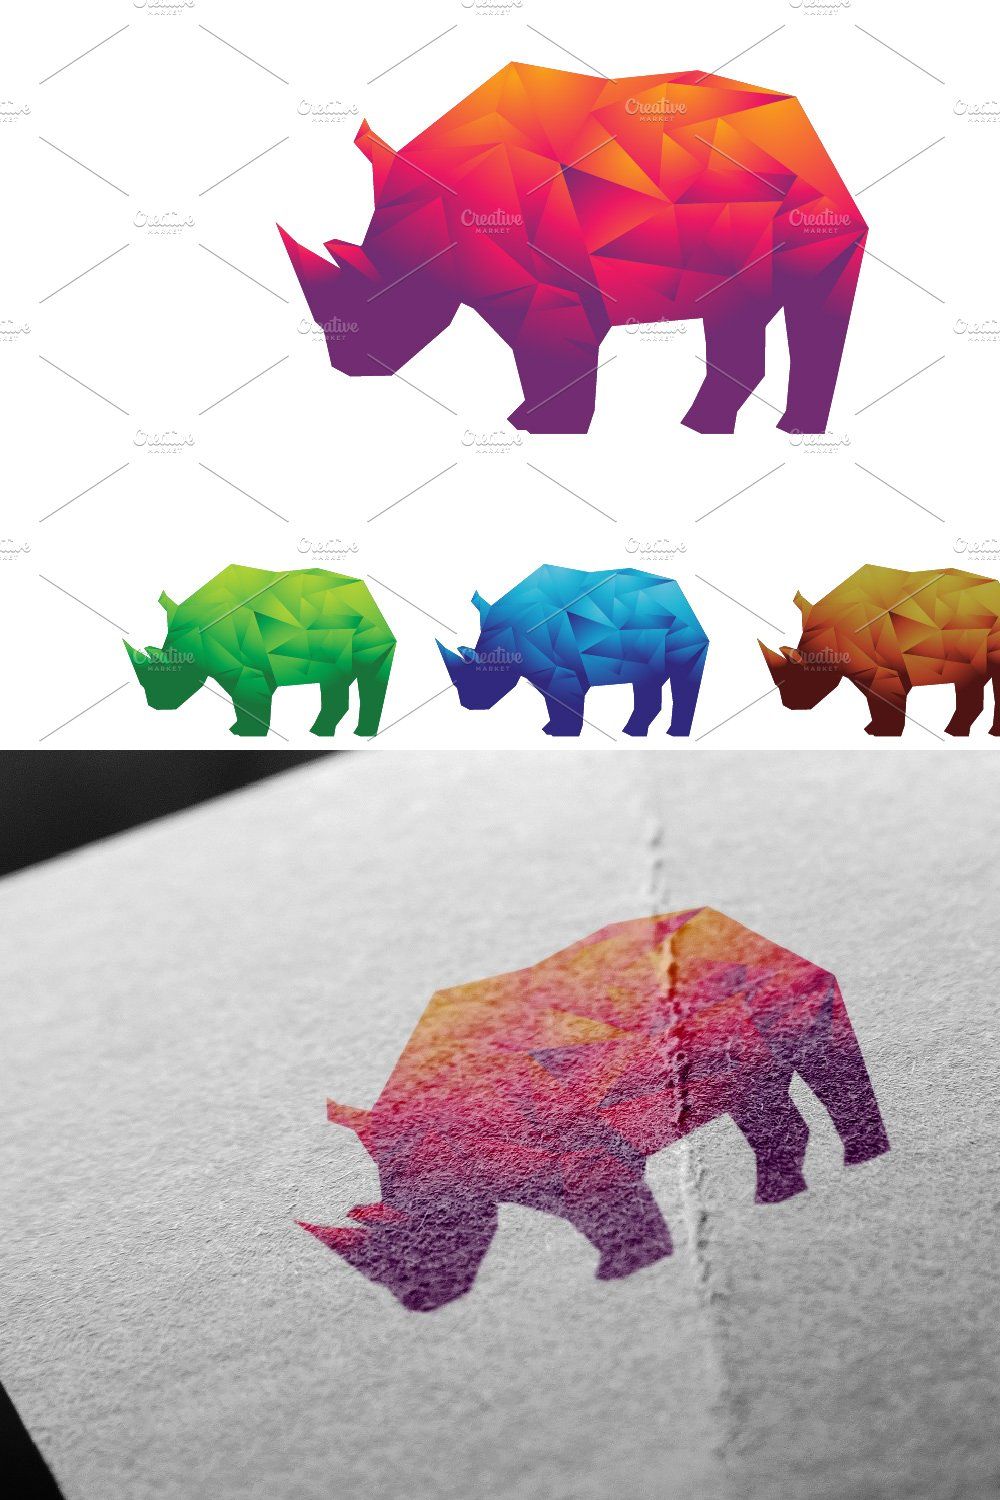 Rhino Rhinoceros Low Poly Polygon pinterest preview image.